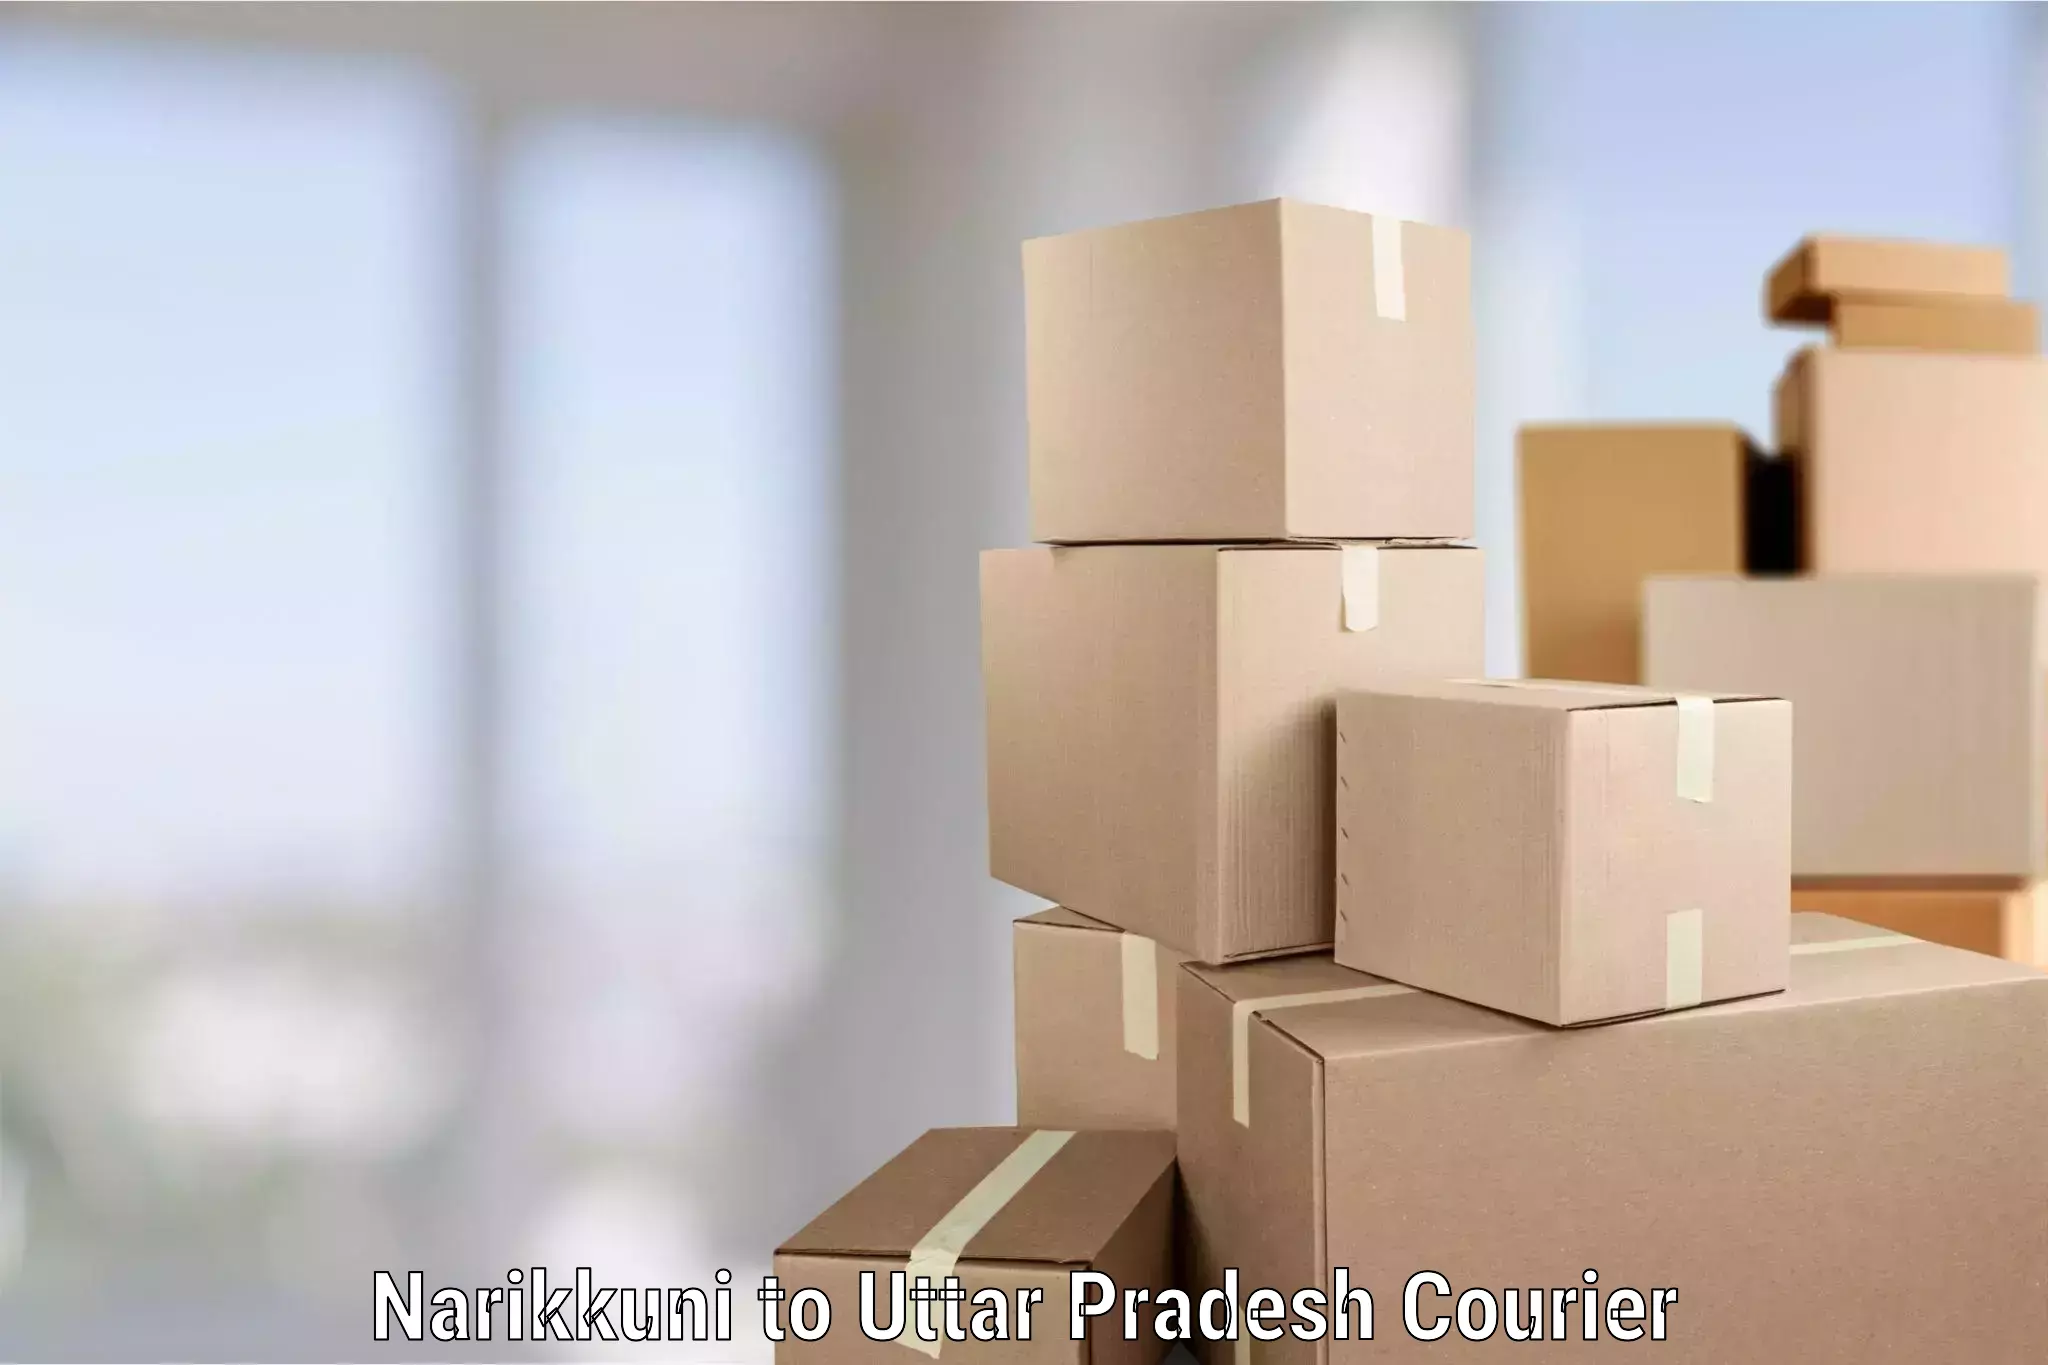 Moving and handling services Narikkuni to Uttar Pradesh